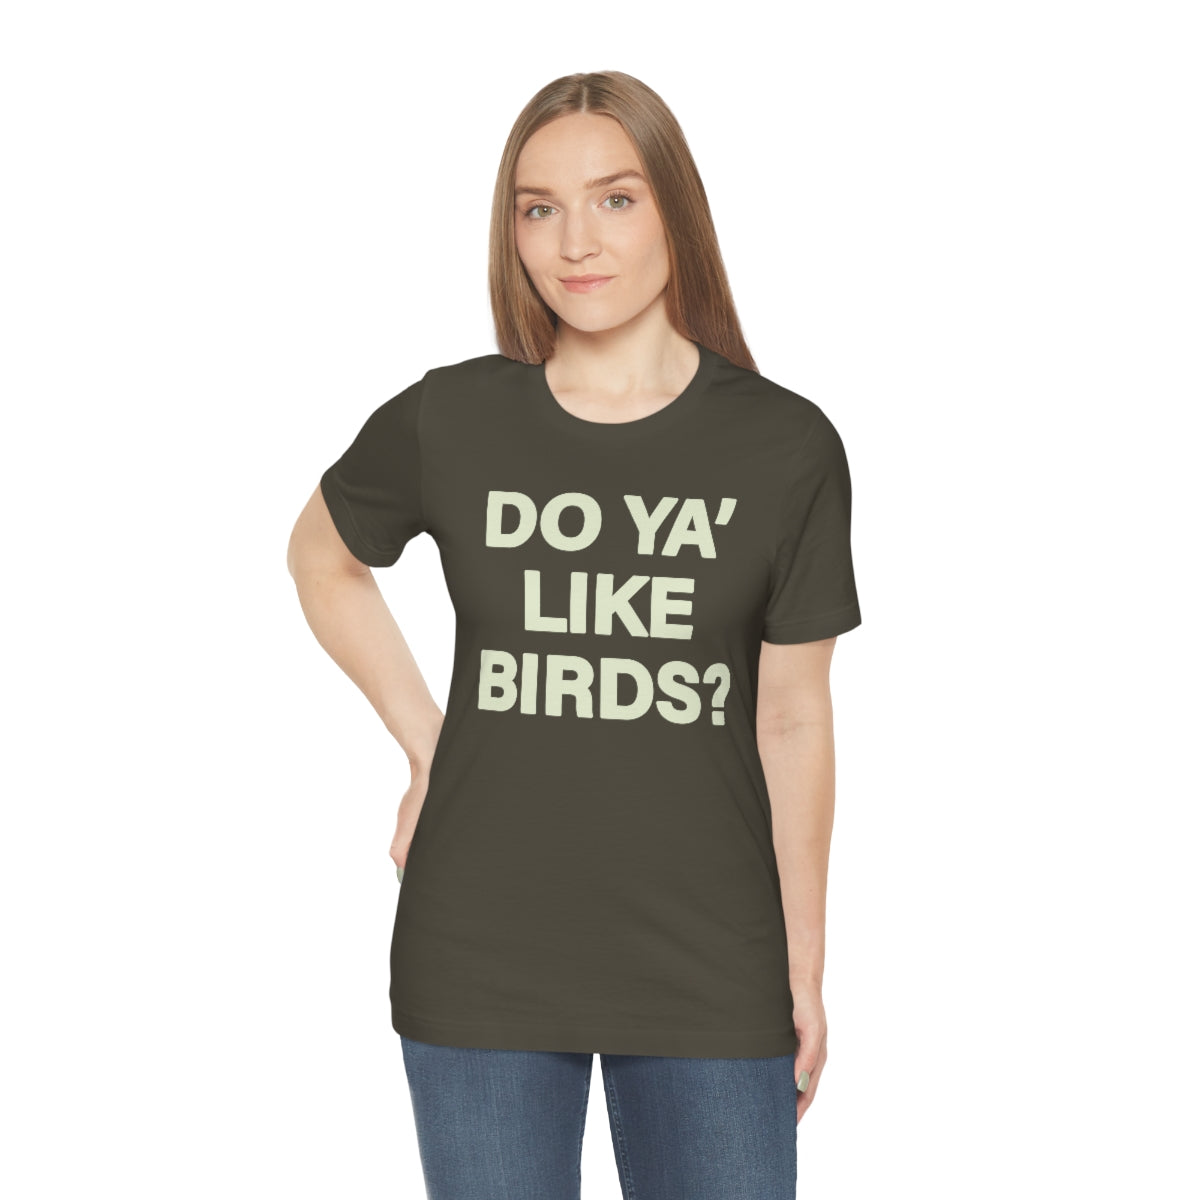 Like Birds?